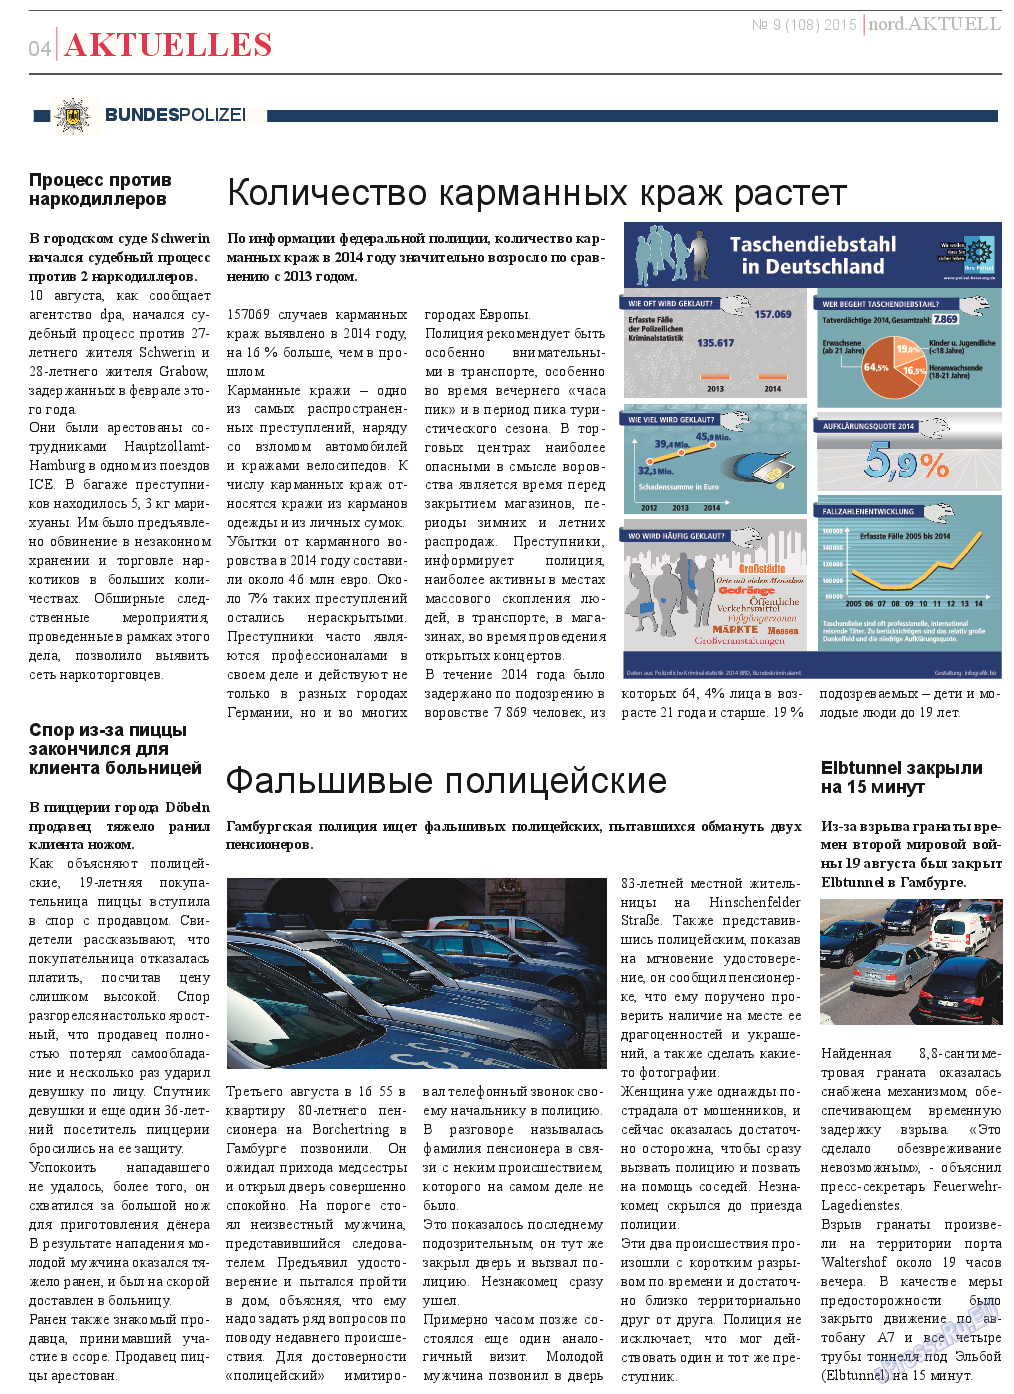 nord.Aktuell, газета. 2015 №9 стр.4